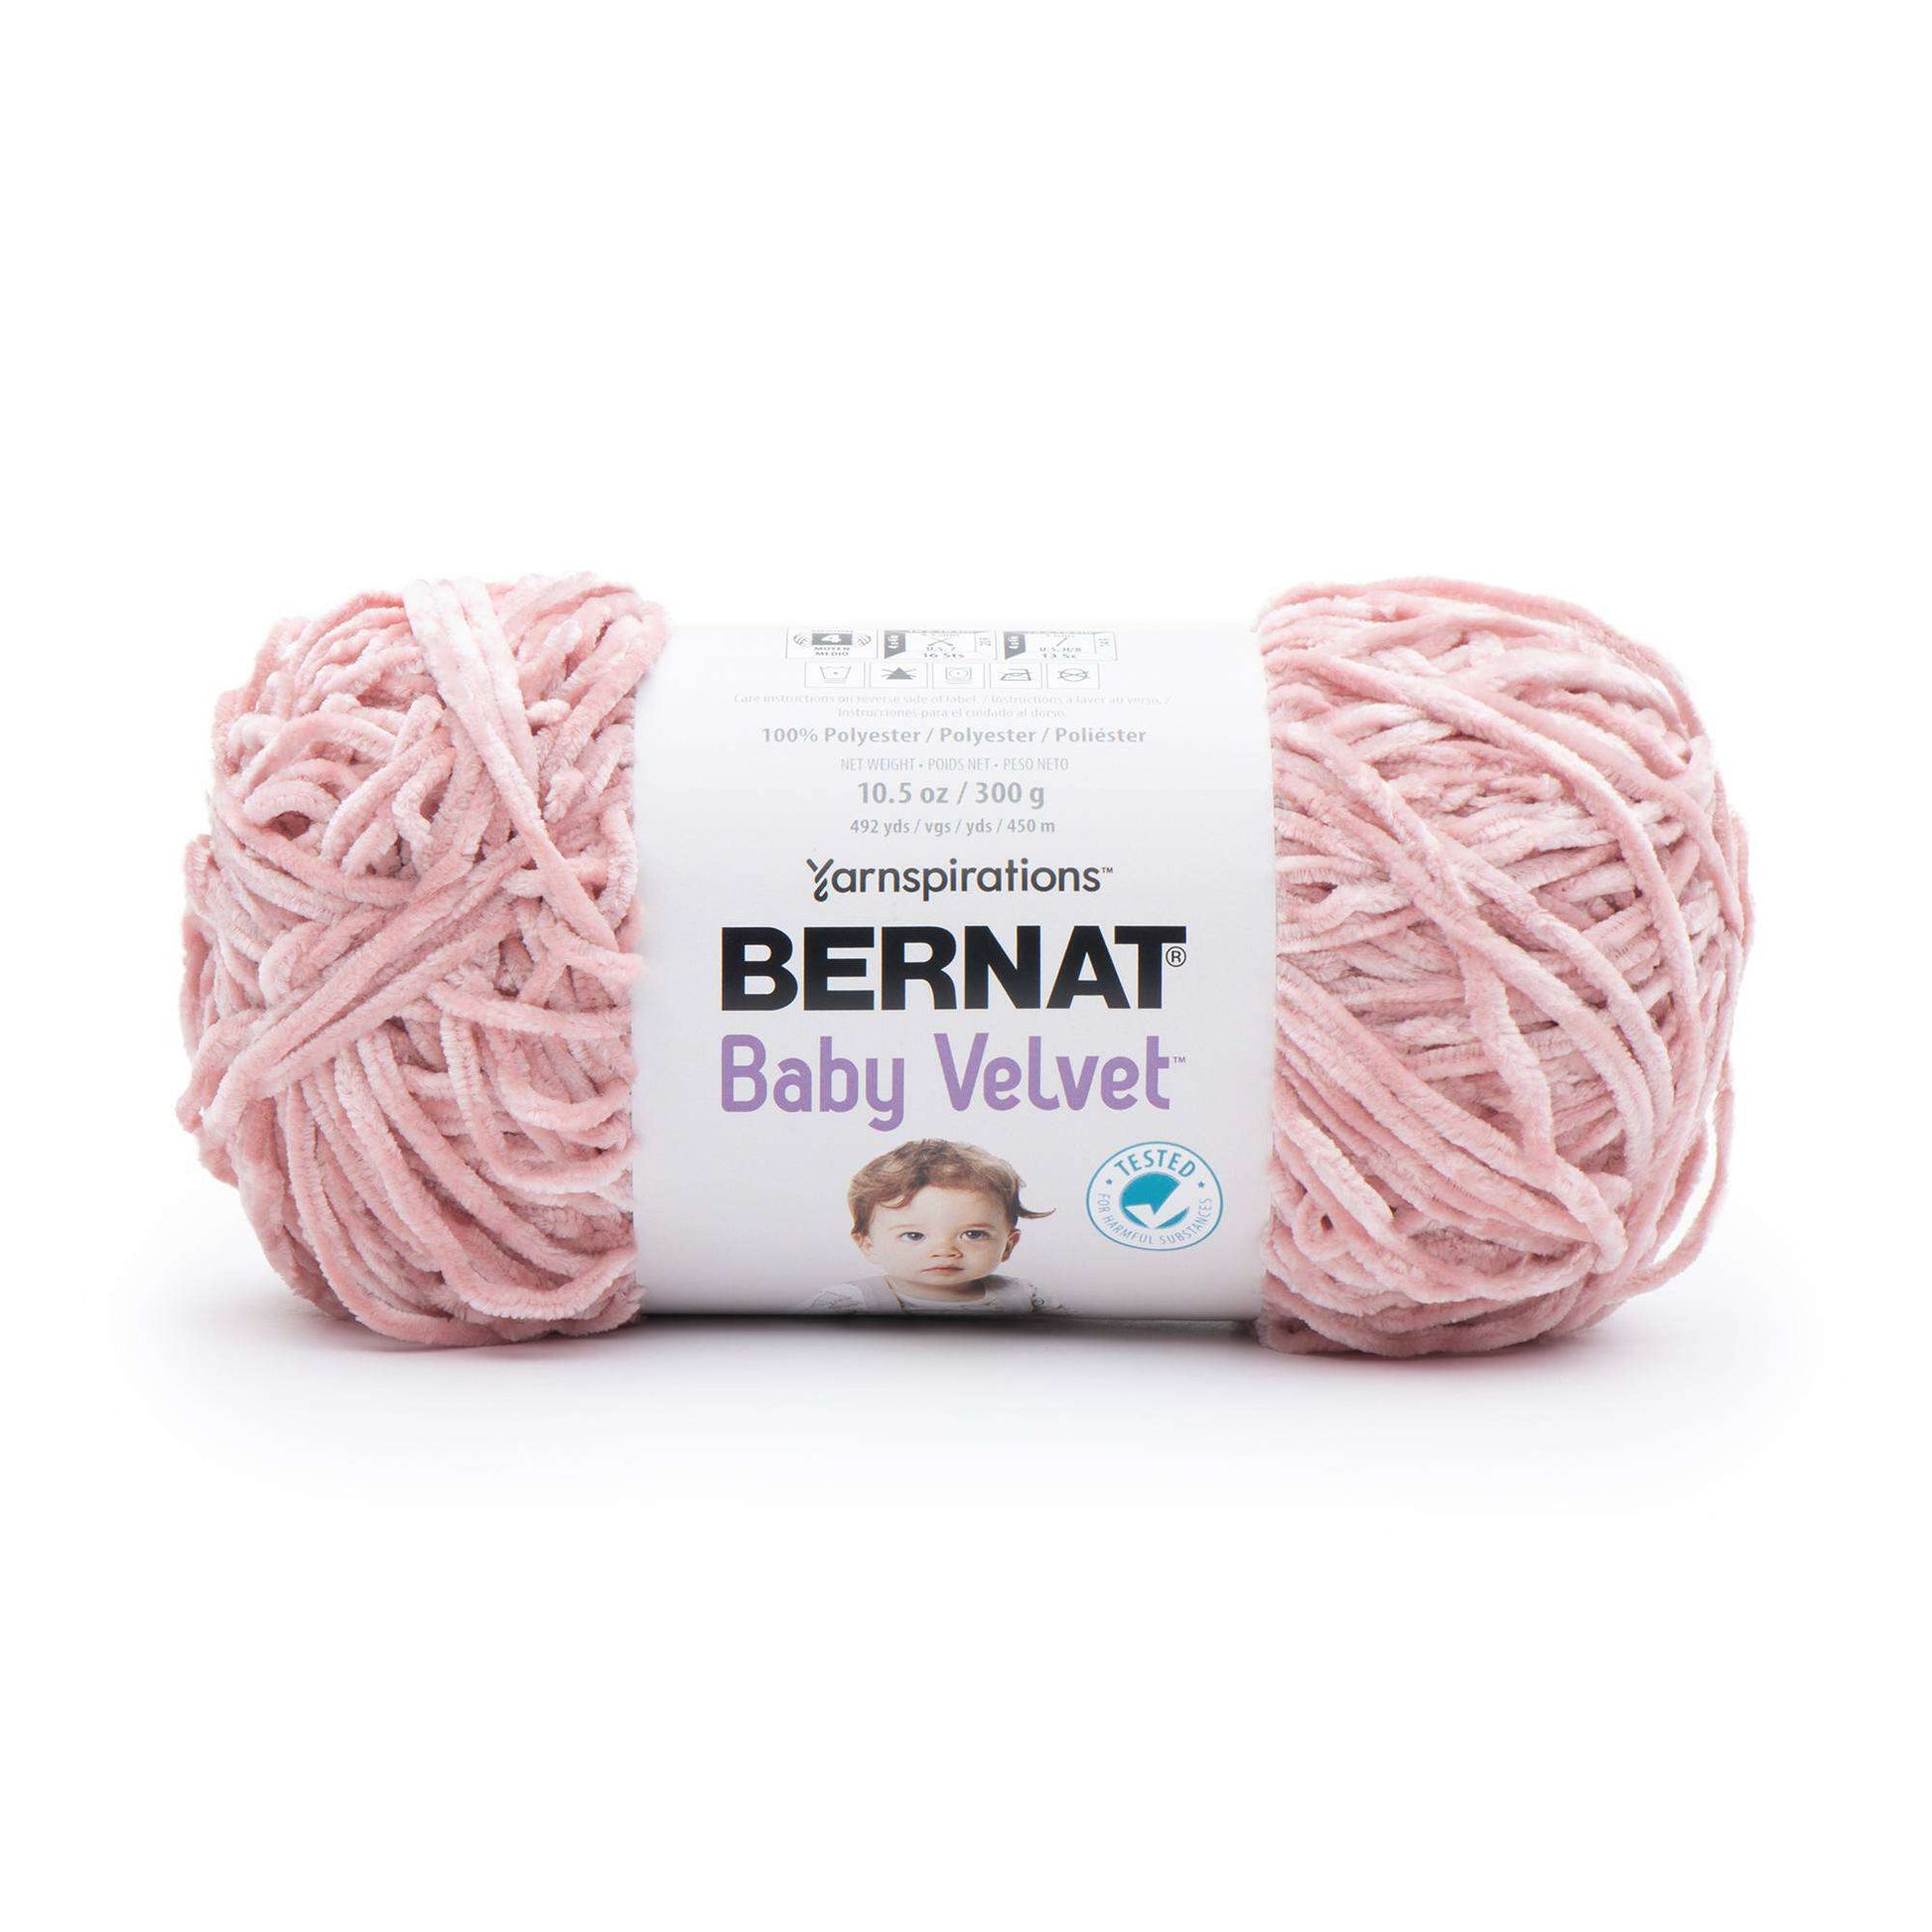 Bernat Baby Velvet Yarn (300g/10.5oz) - Discontinued Shades